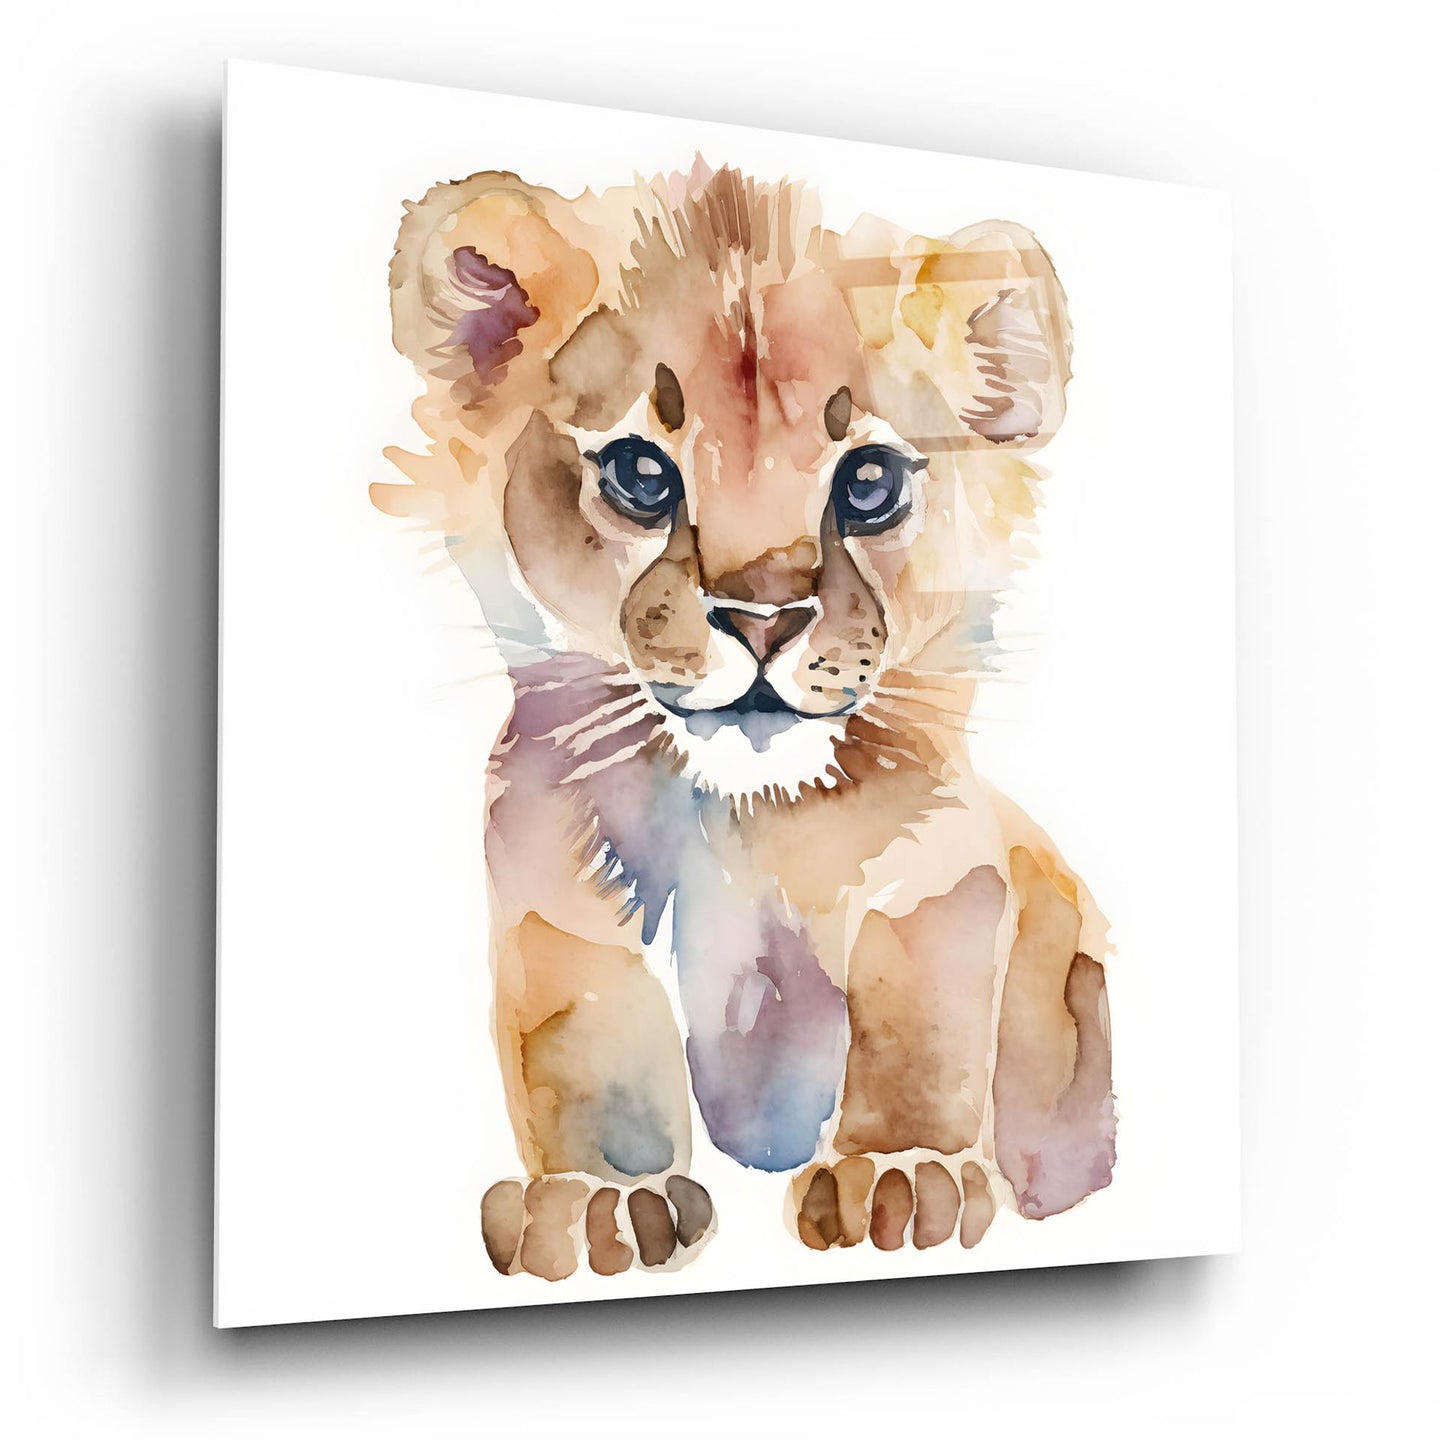 Epic Art 'Baby Lion' by Petals Prints Design, Acrylic Glass Wall Art,12x12